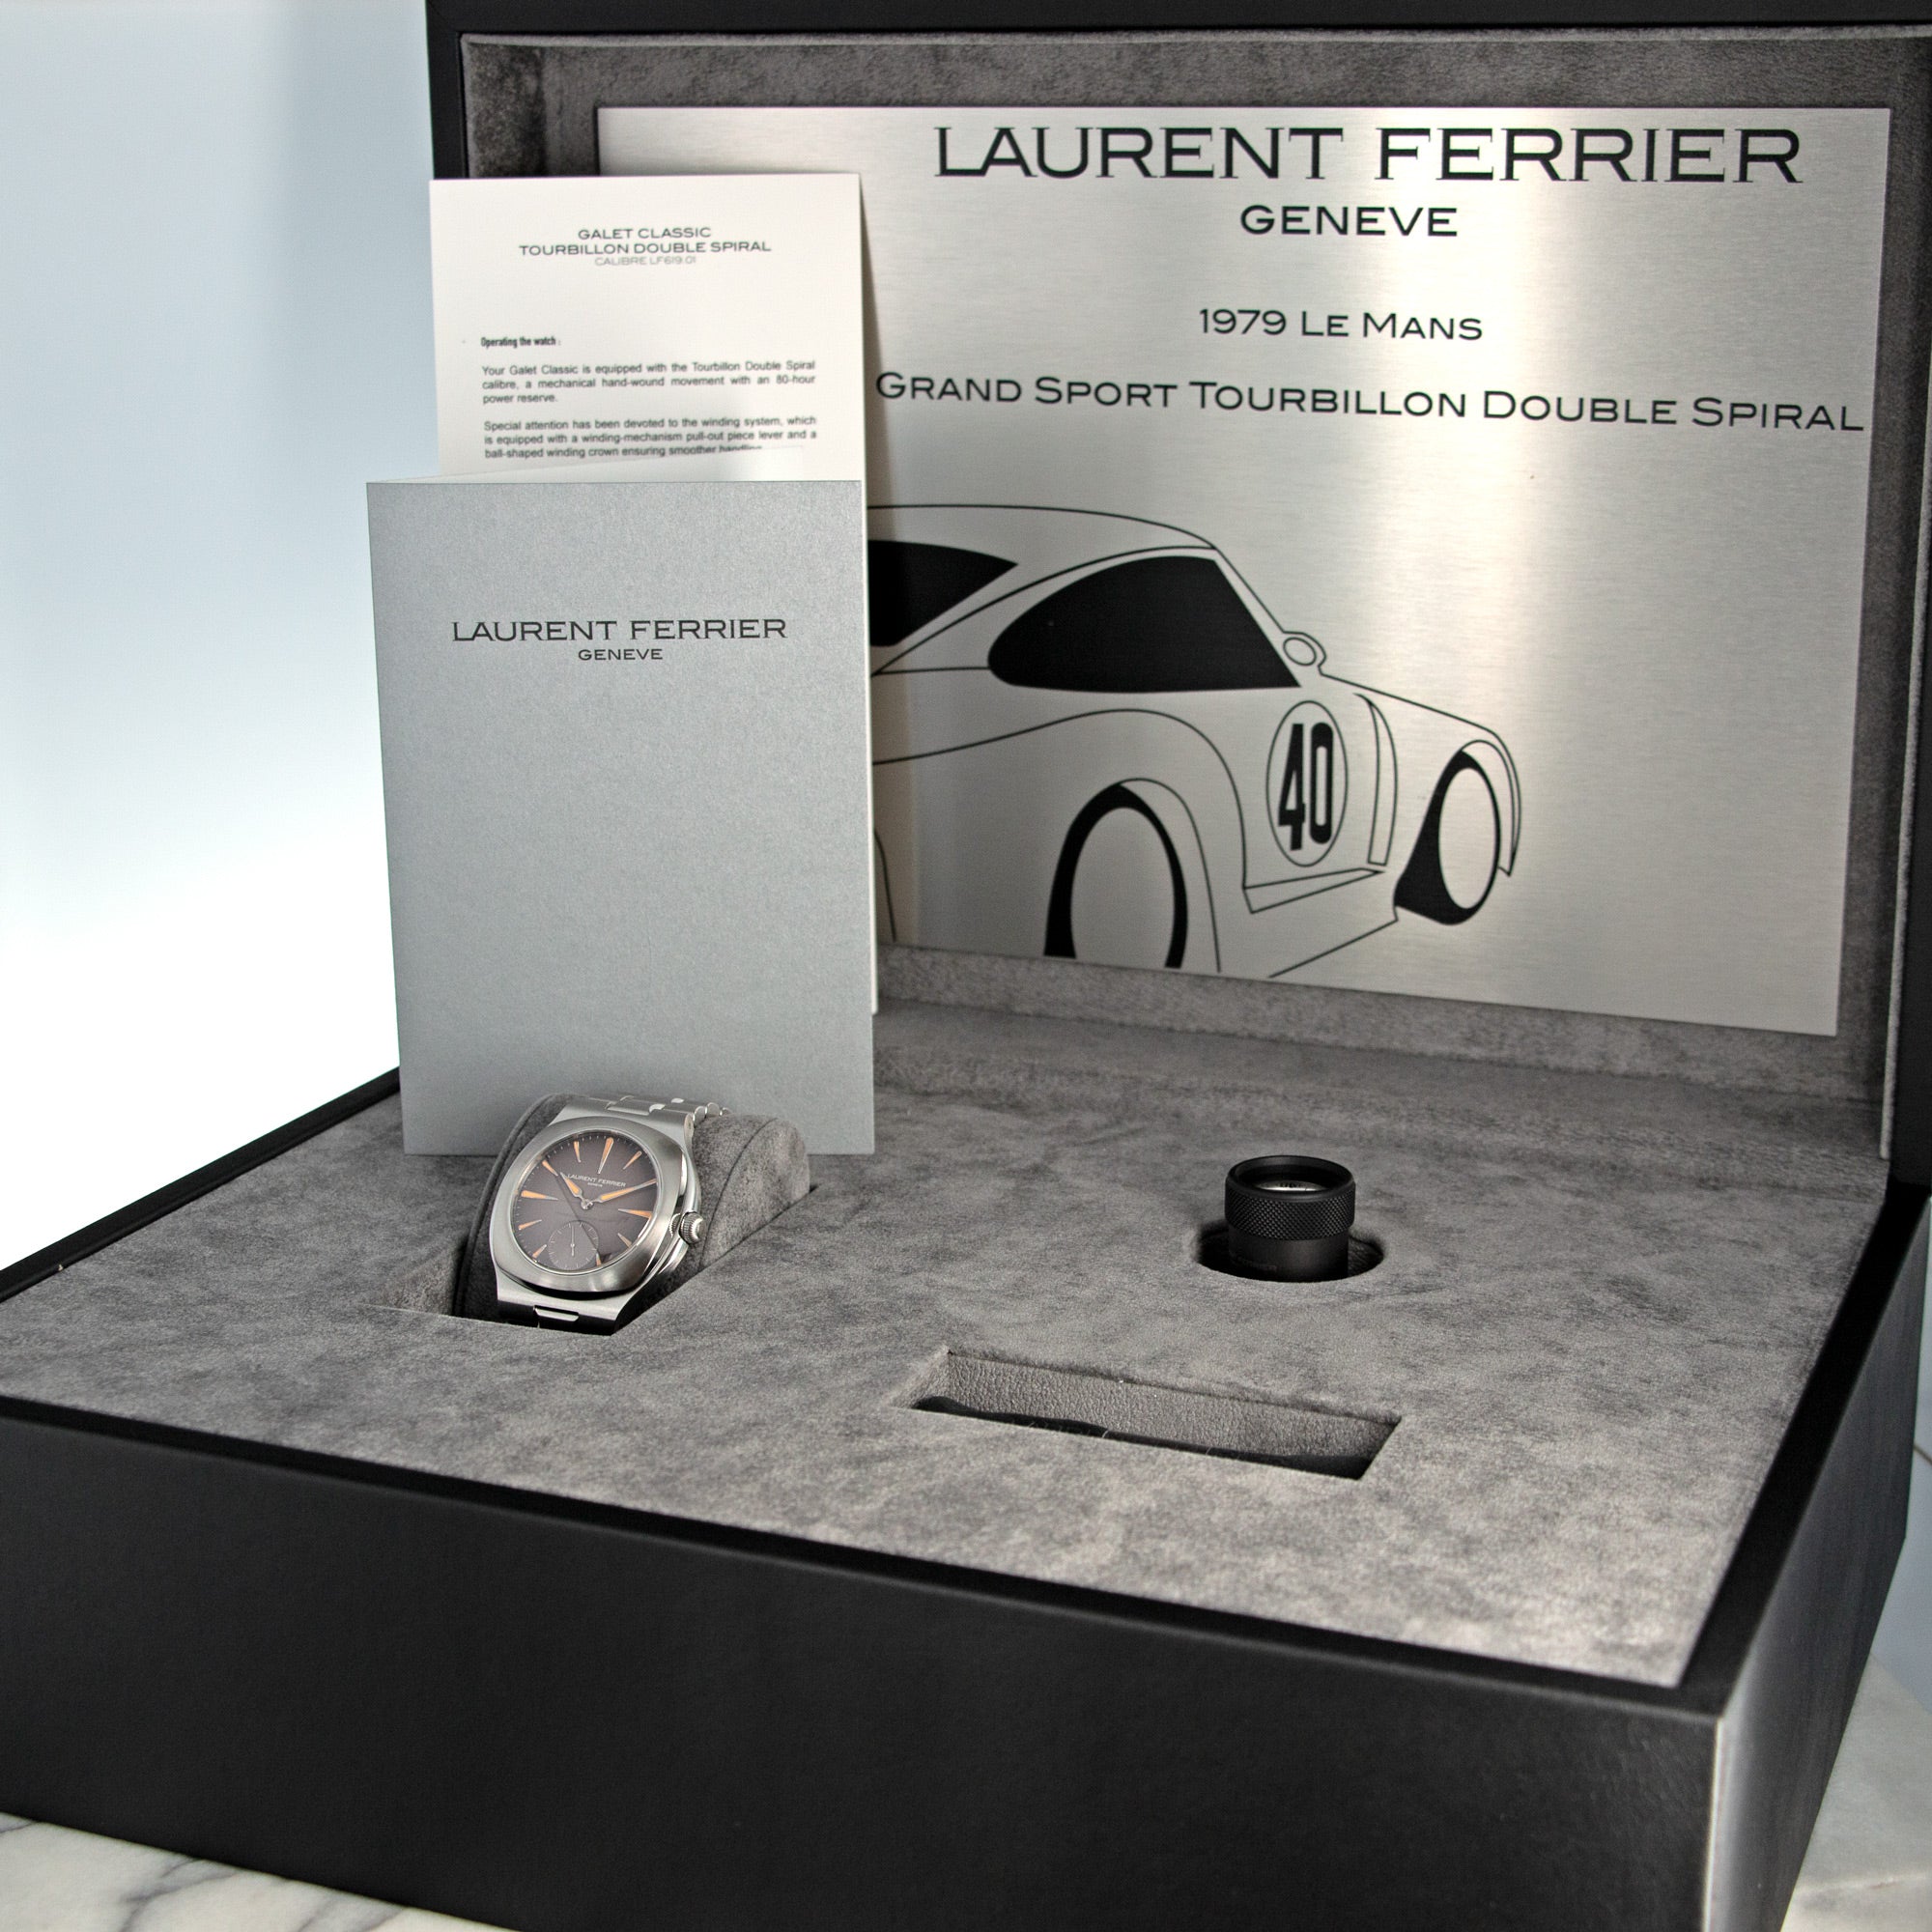 Laurent Ferrier - Laurent Ferrier Steel Tourbillon Grand Sport Watch, Ref. LF 619.01 - The Keystone Watches